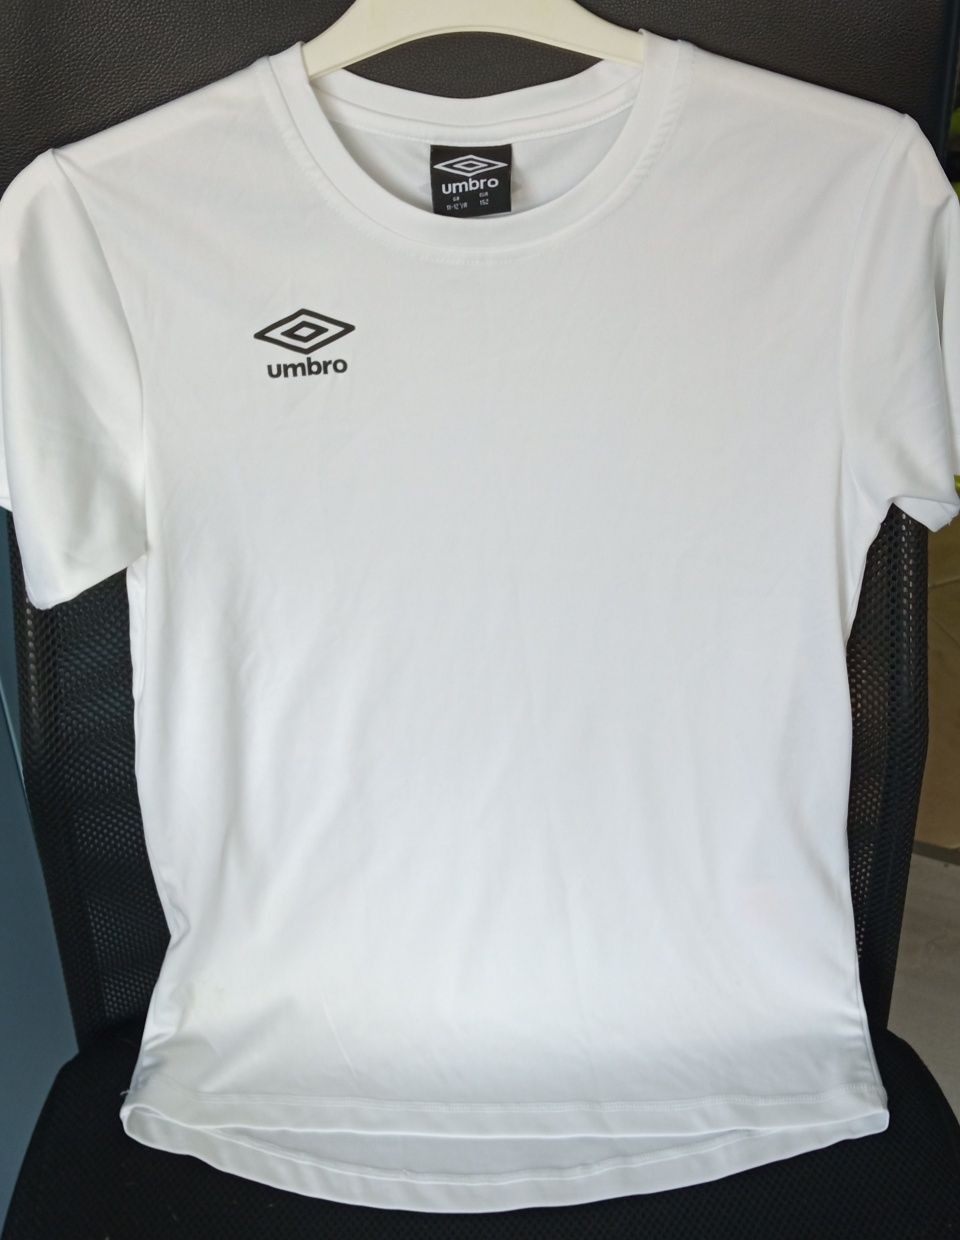 Koszulki sportowe 5 sztuk Adidas Umbro r. 152